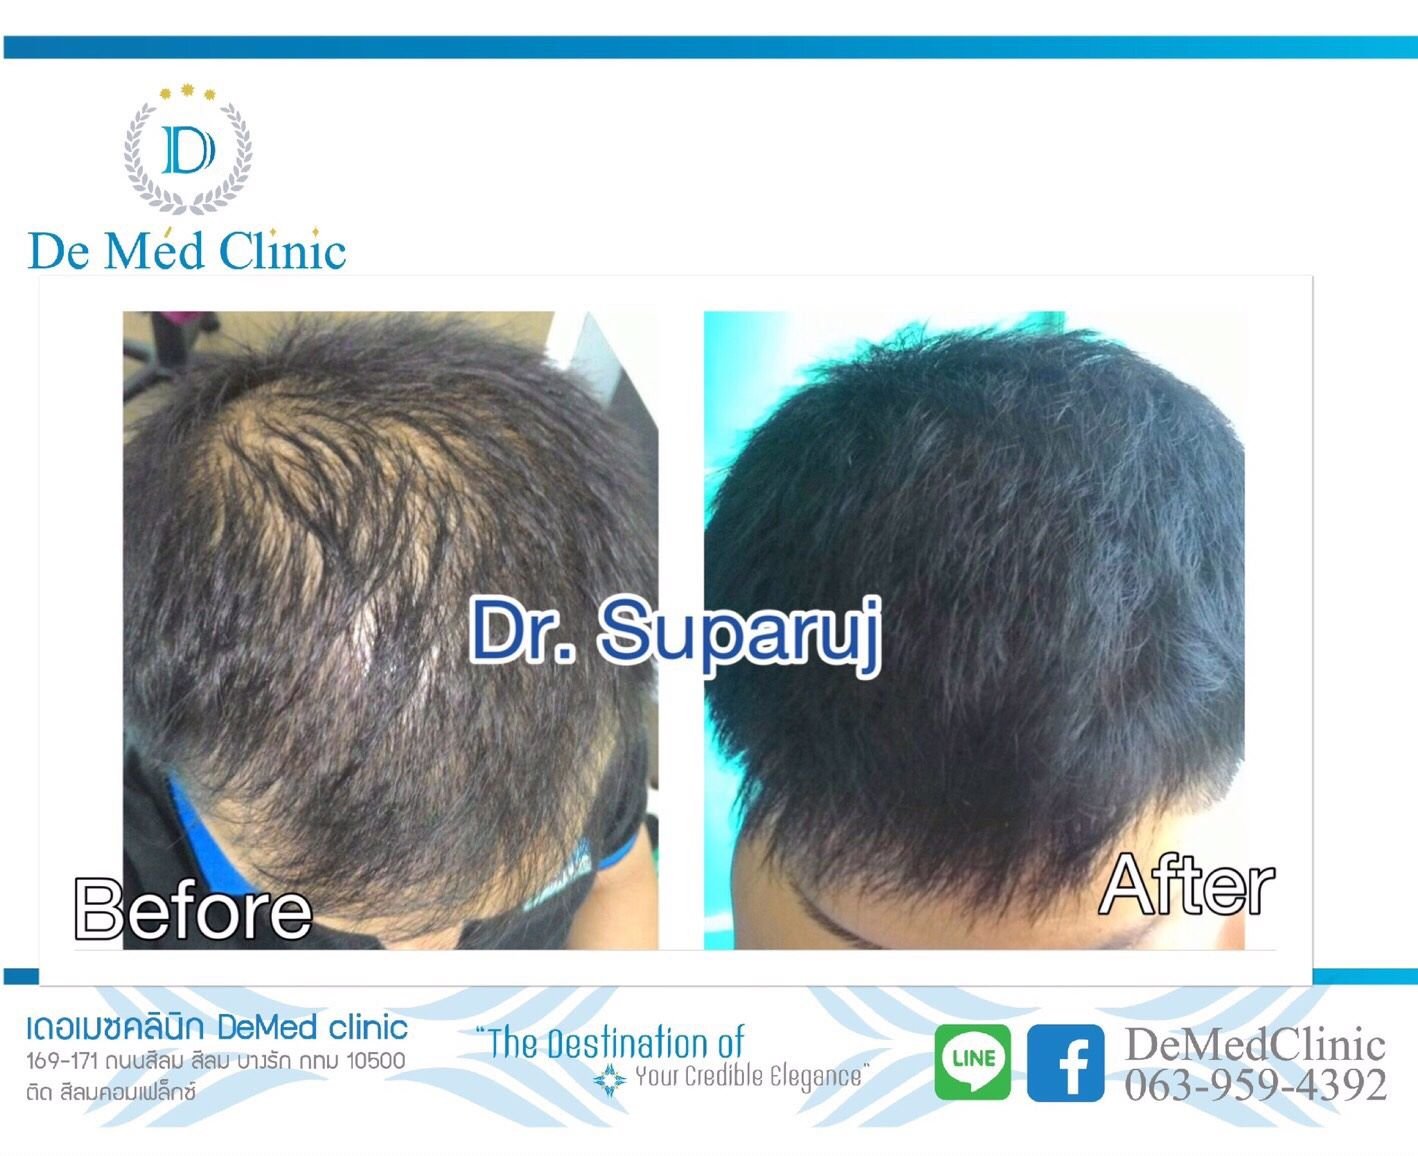 “De Med Hair & Scalp Care Treatment” ทรีทเมนท์ผมและหนังศีรษะสูตรพิเศษโดย De Med Clinic 